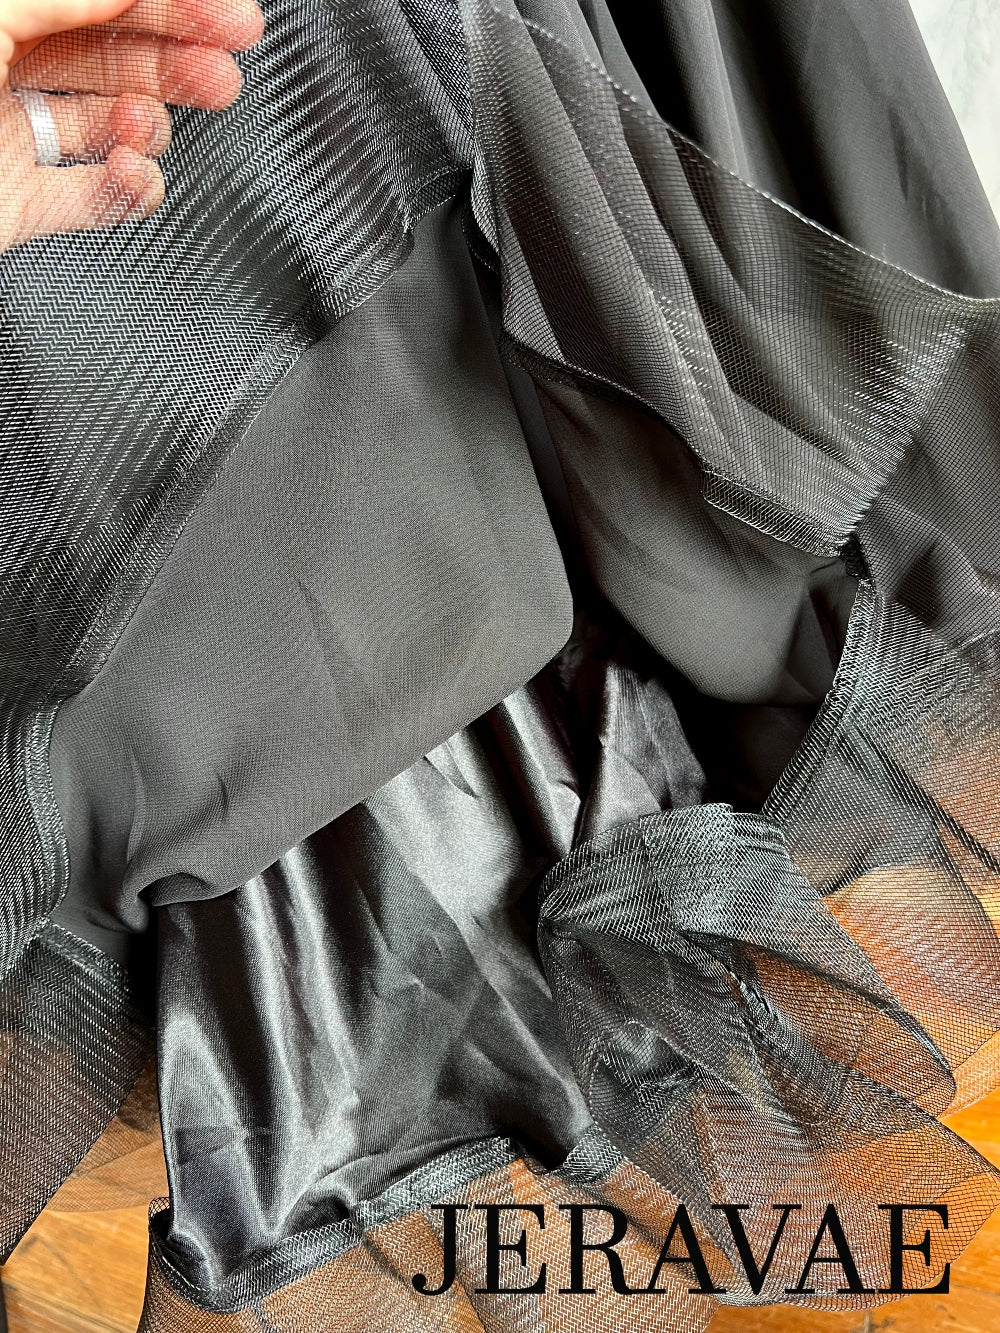 Black ballroom dress with flared crinoline skirt hem